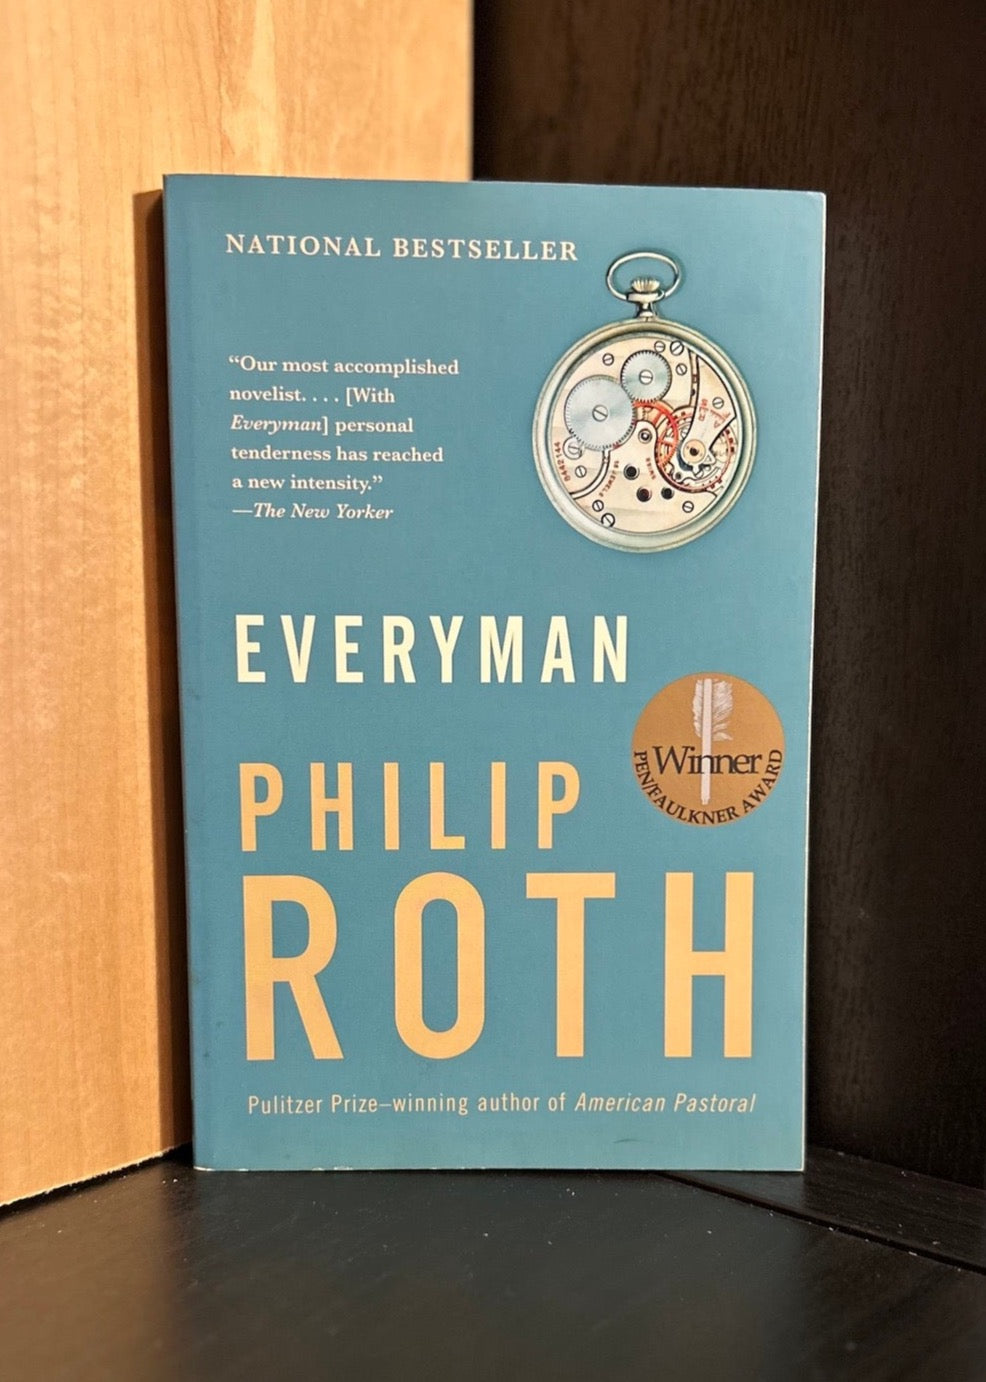 Everyman - Philip Roth